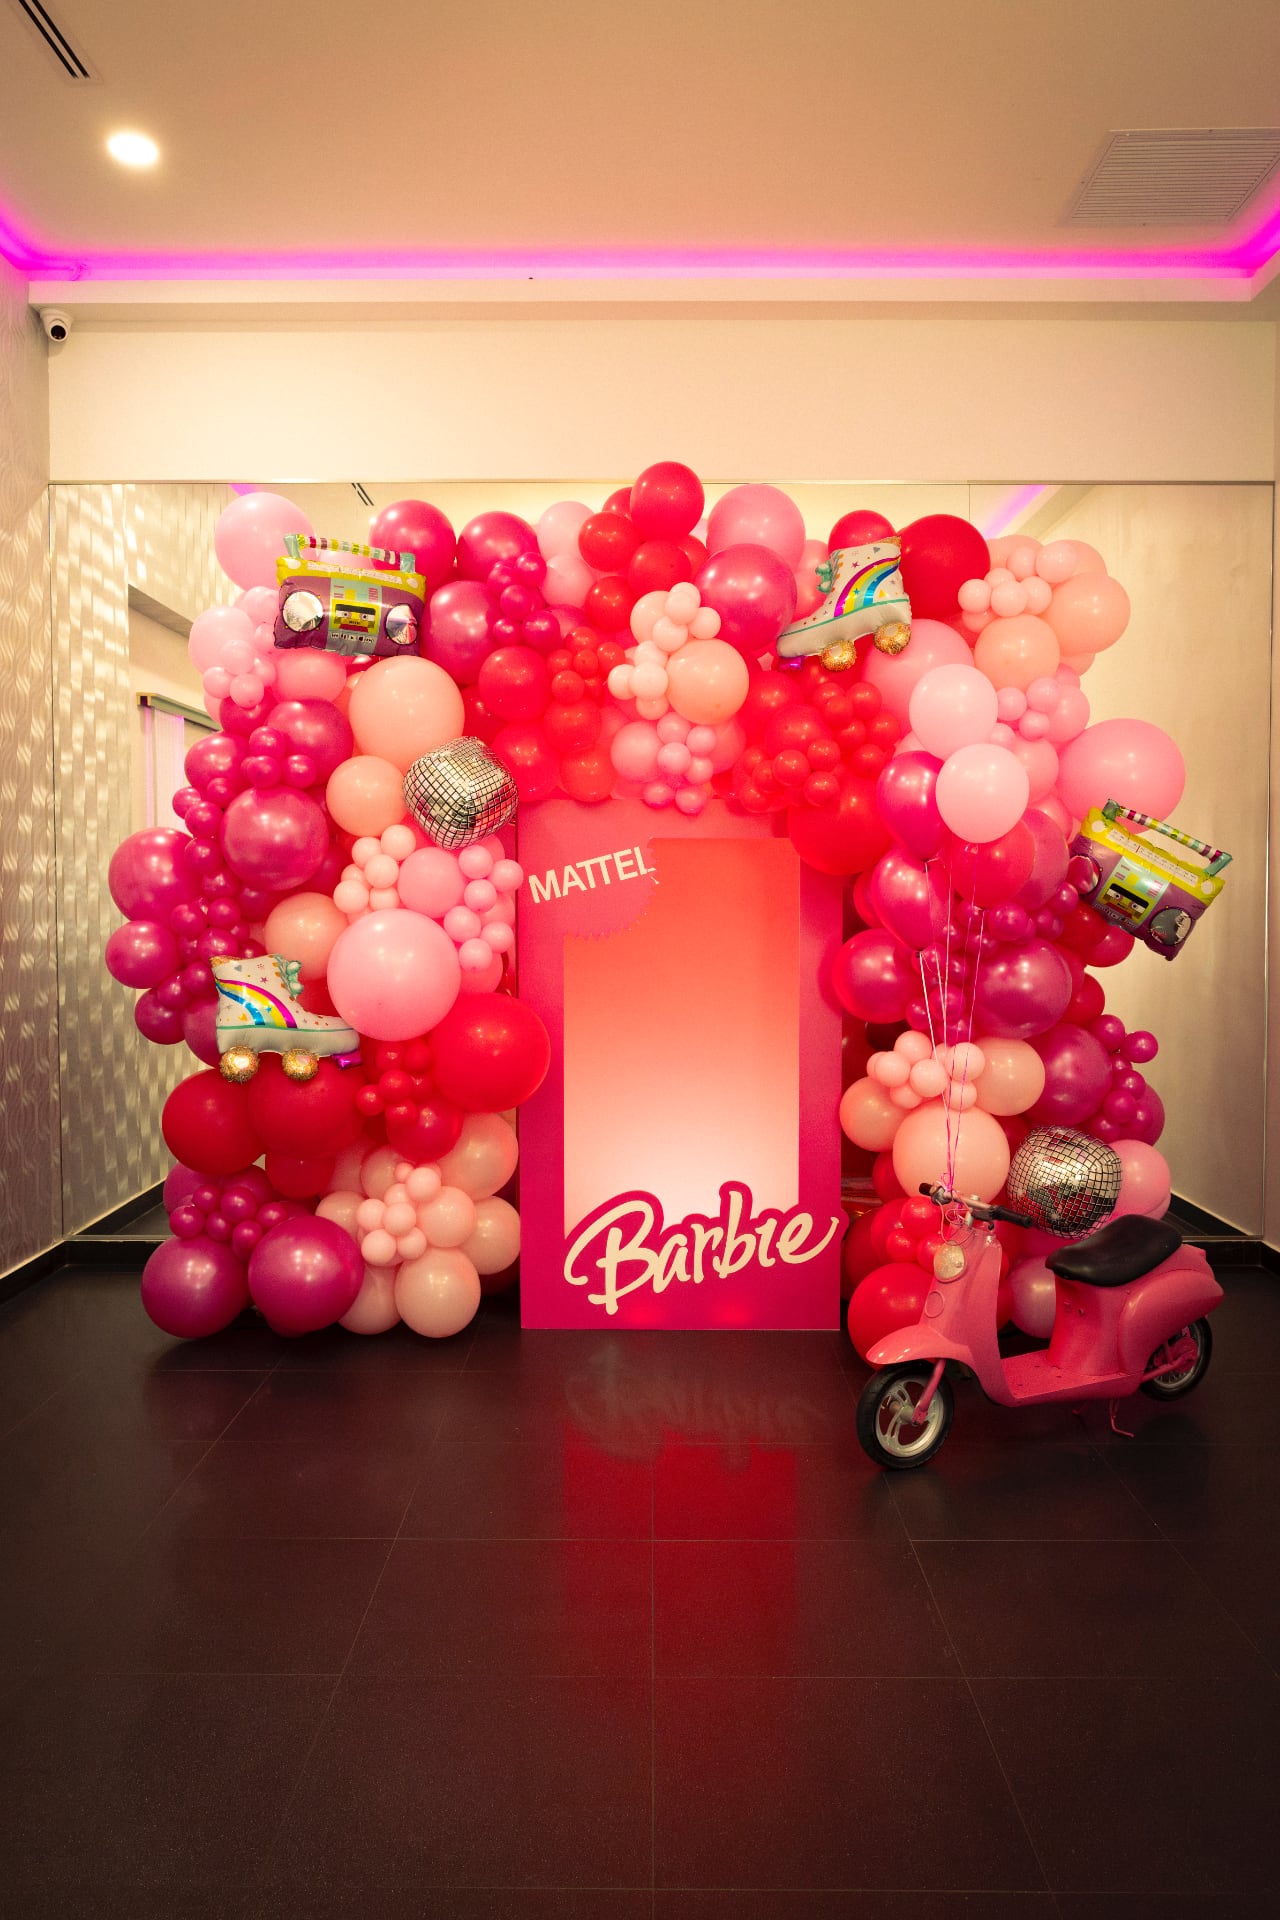 Barbie - Onyx Luxury Banquet Hall